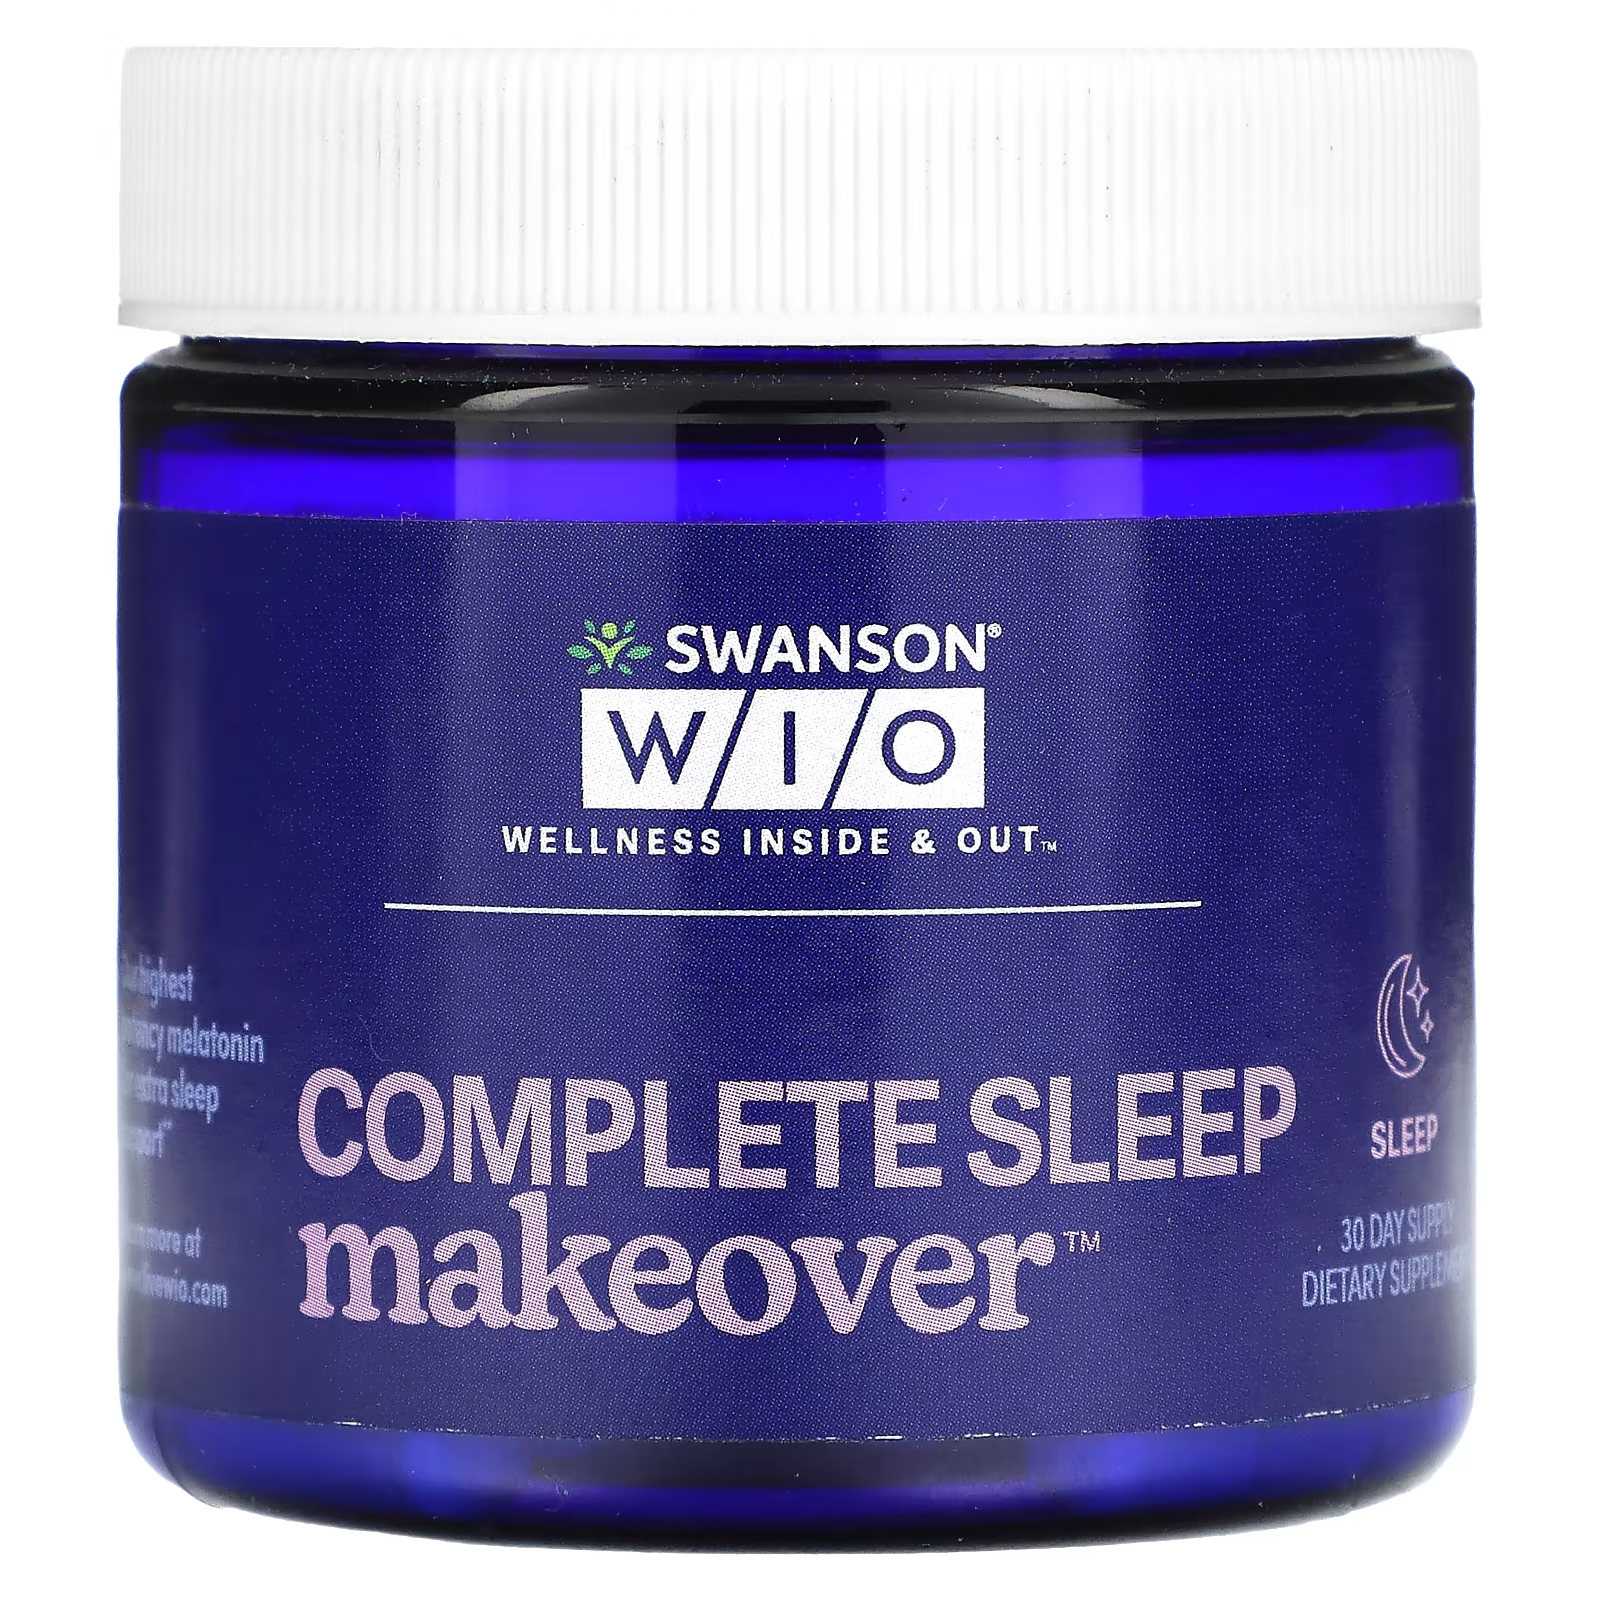 Swanson WIO Complete Sleep Makeover Sleep 30-дневный запас